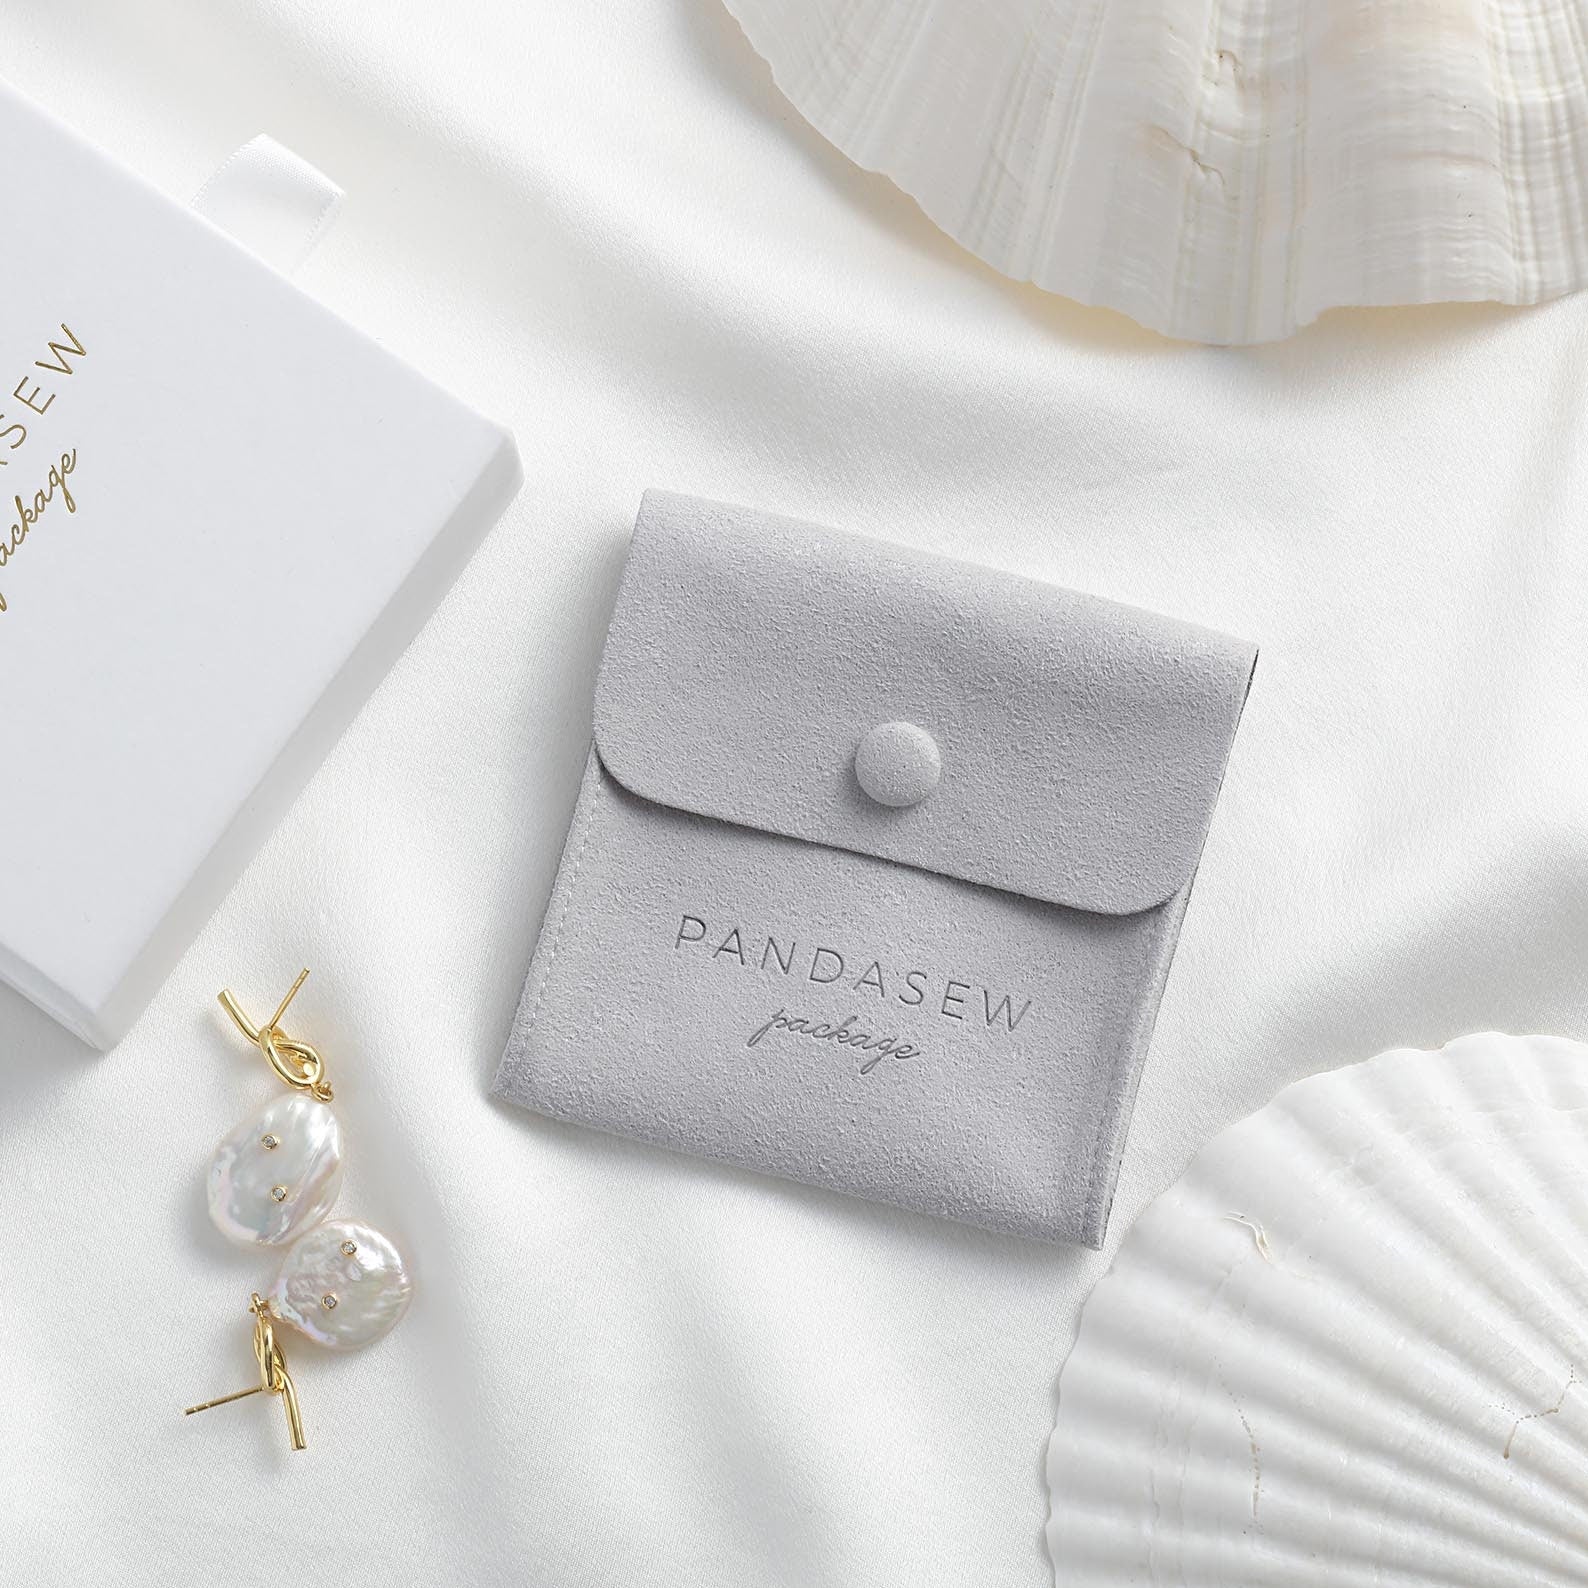  PandaSew Microfiber Jewelry Pouch, 20pcs 8x8cm Luxury